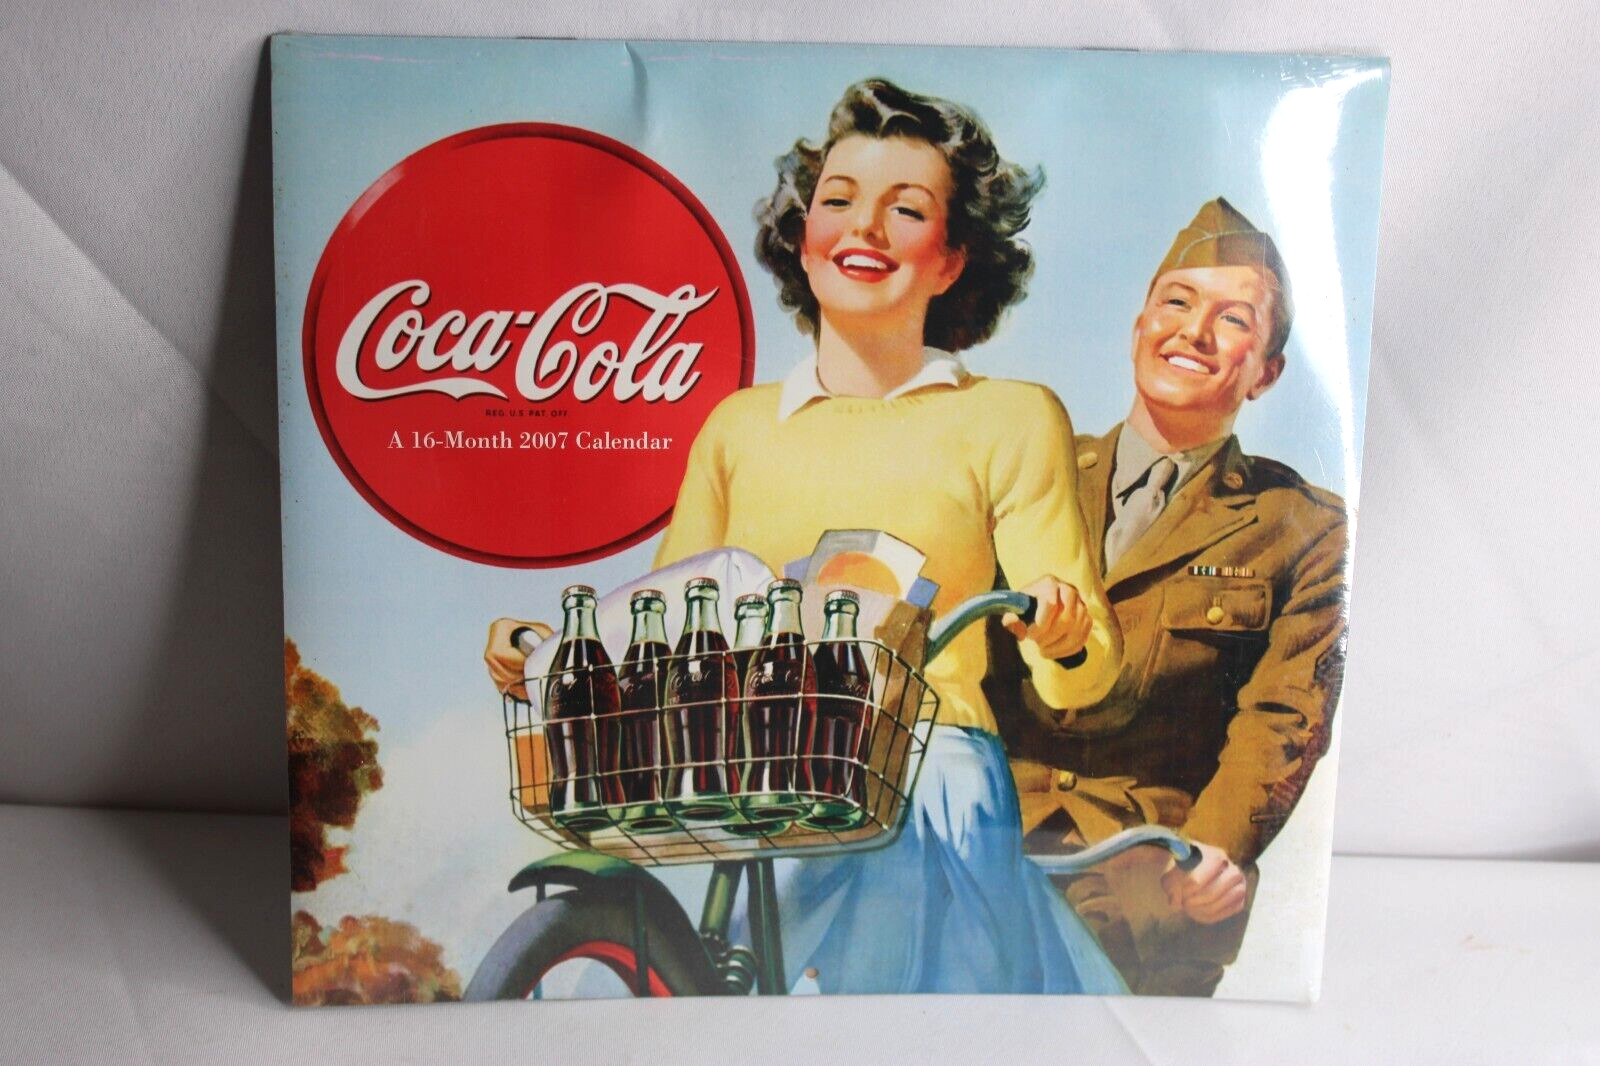 Vintage Coca Cola Coke Calendar, 16 Month 2007 Calendar Factory Sealed